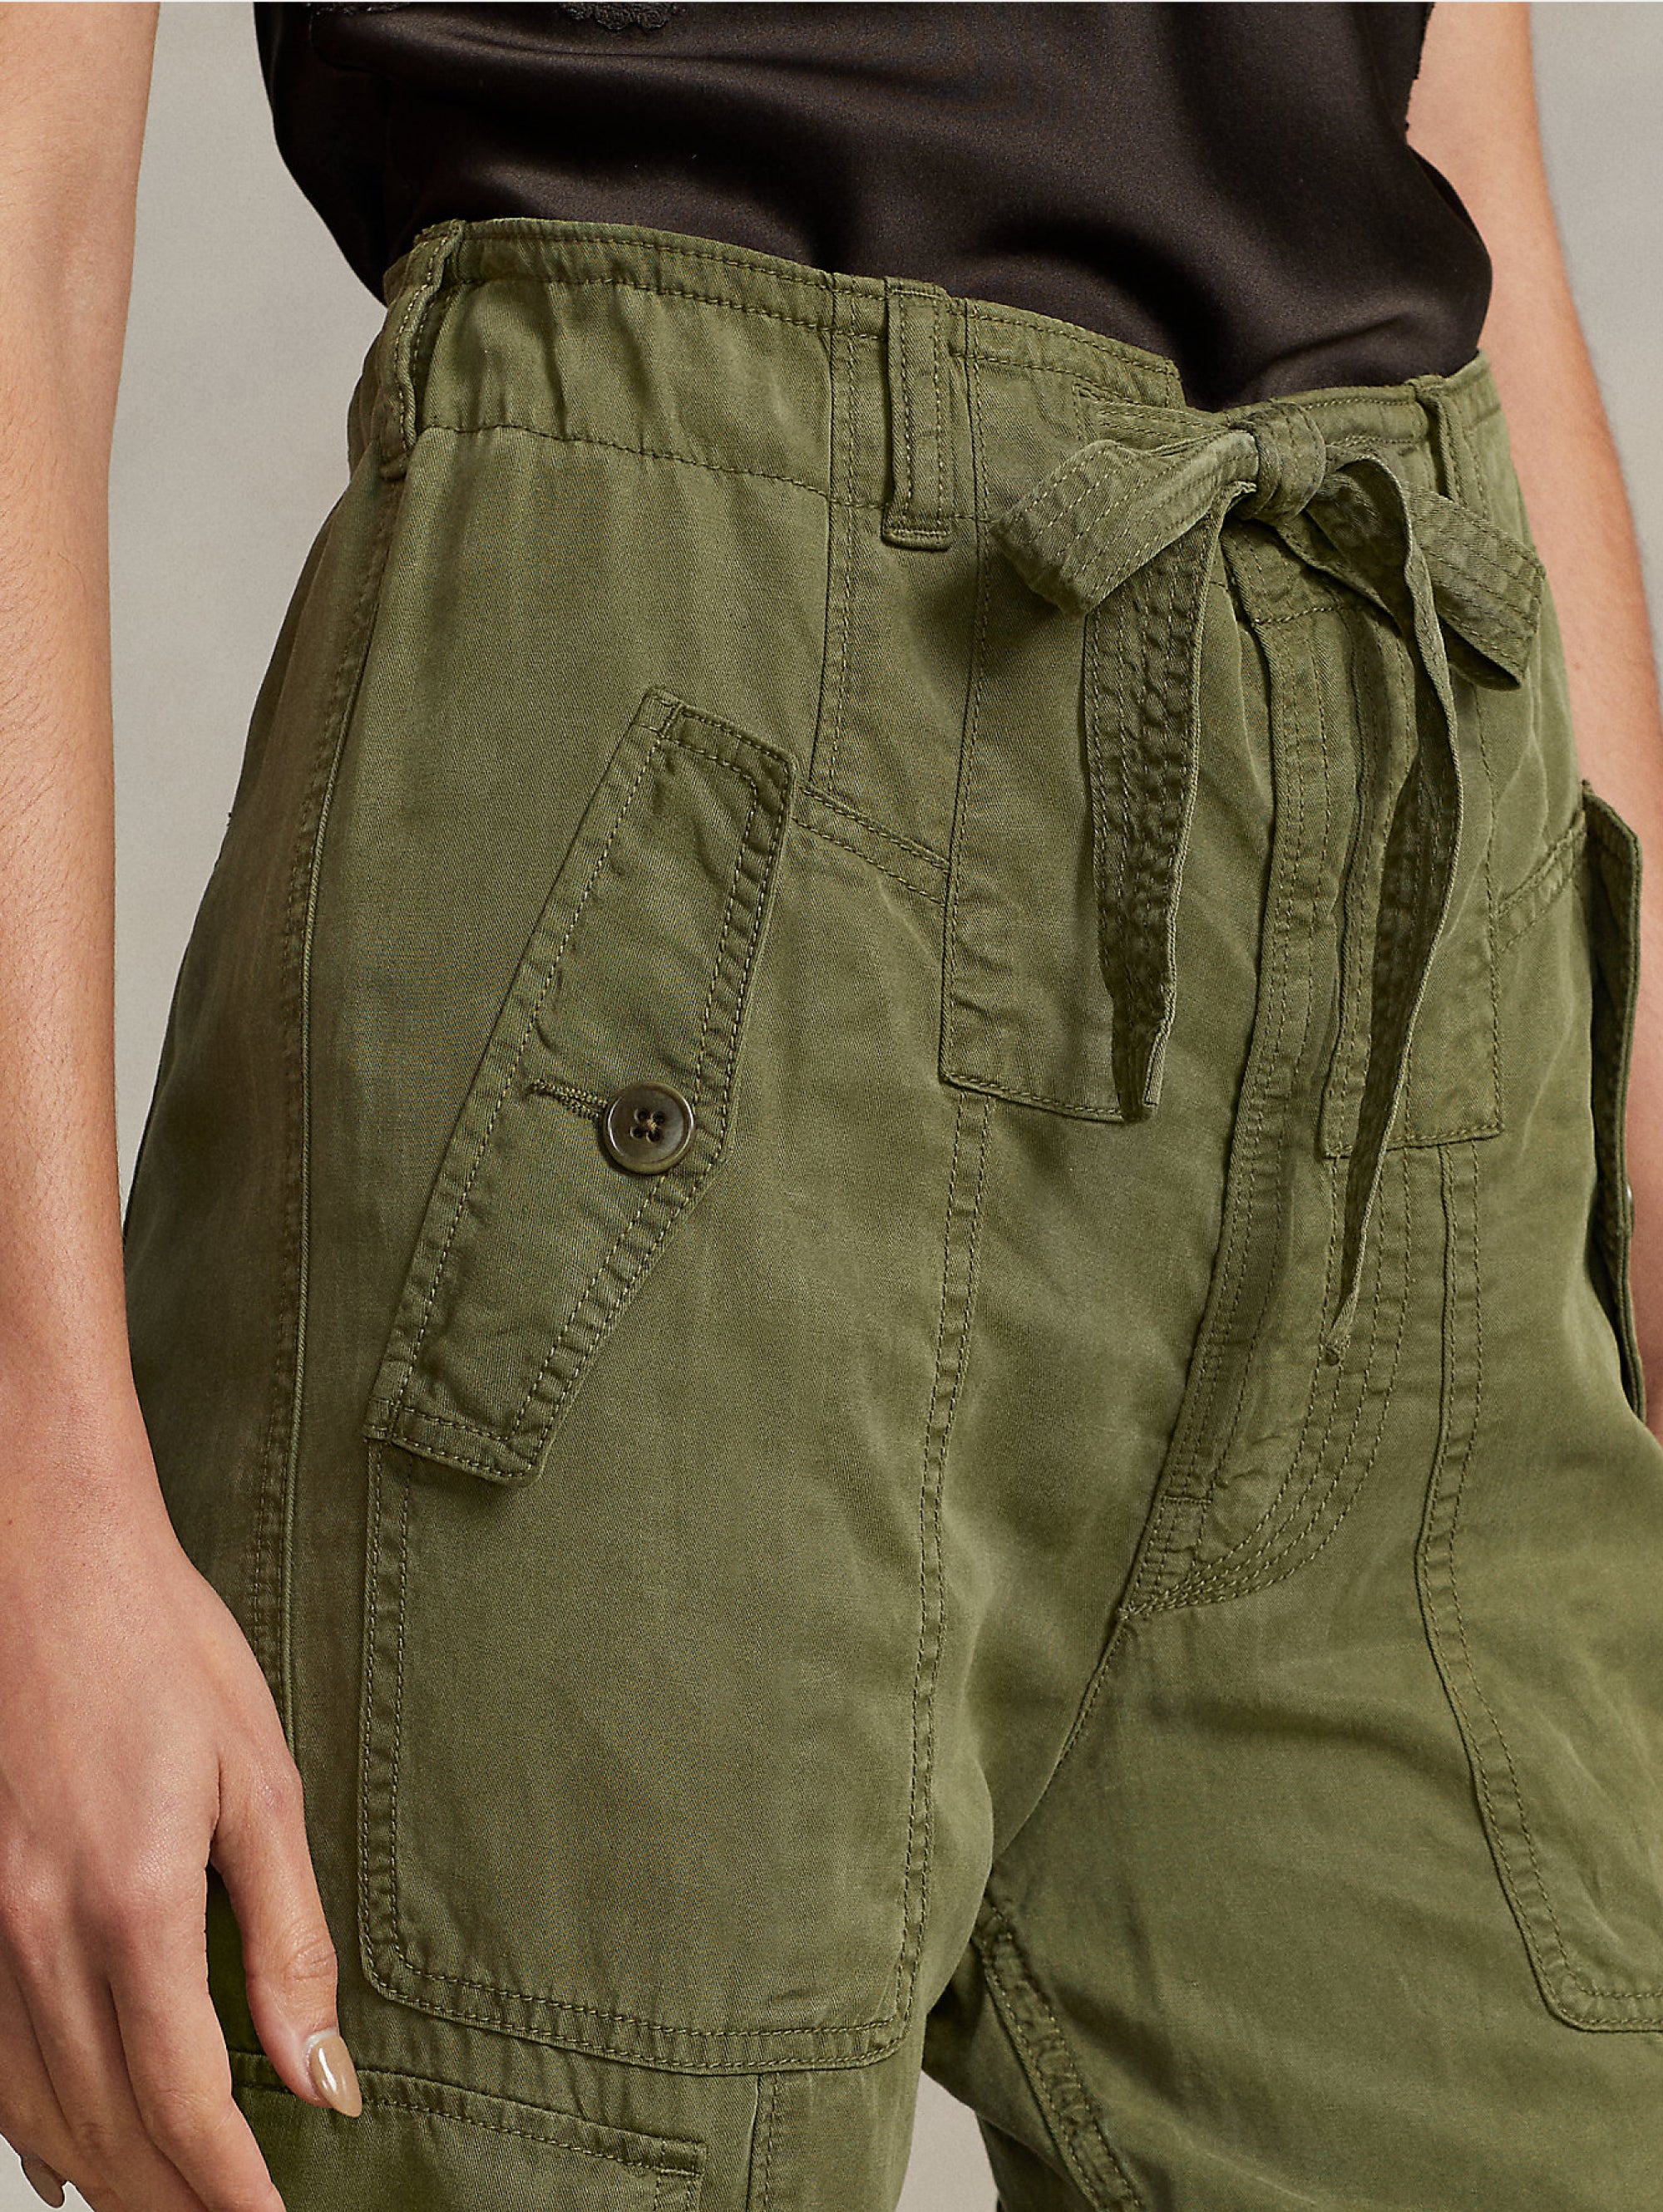 Cargo Pants with Olive Green Linen Blend Belt